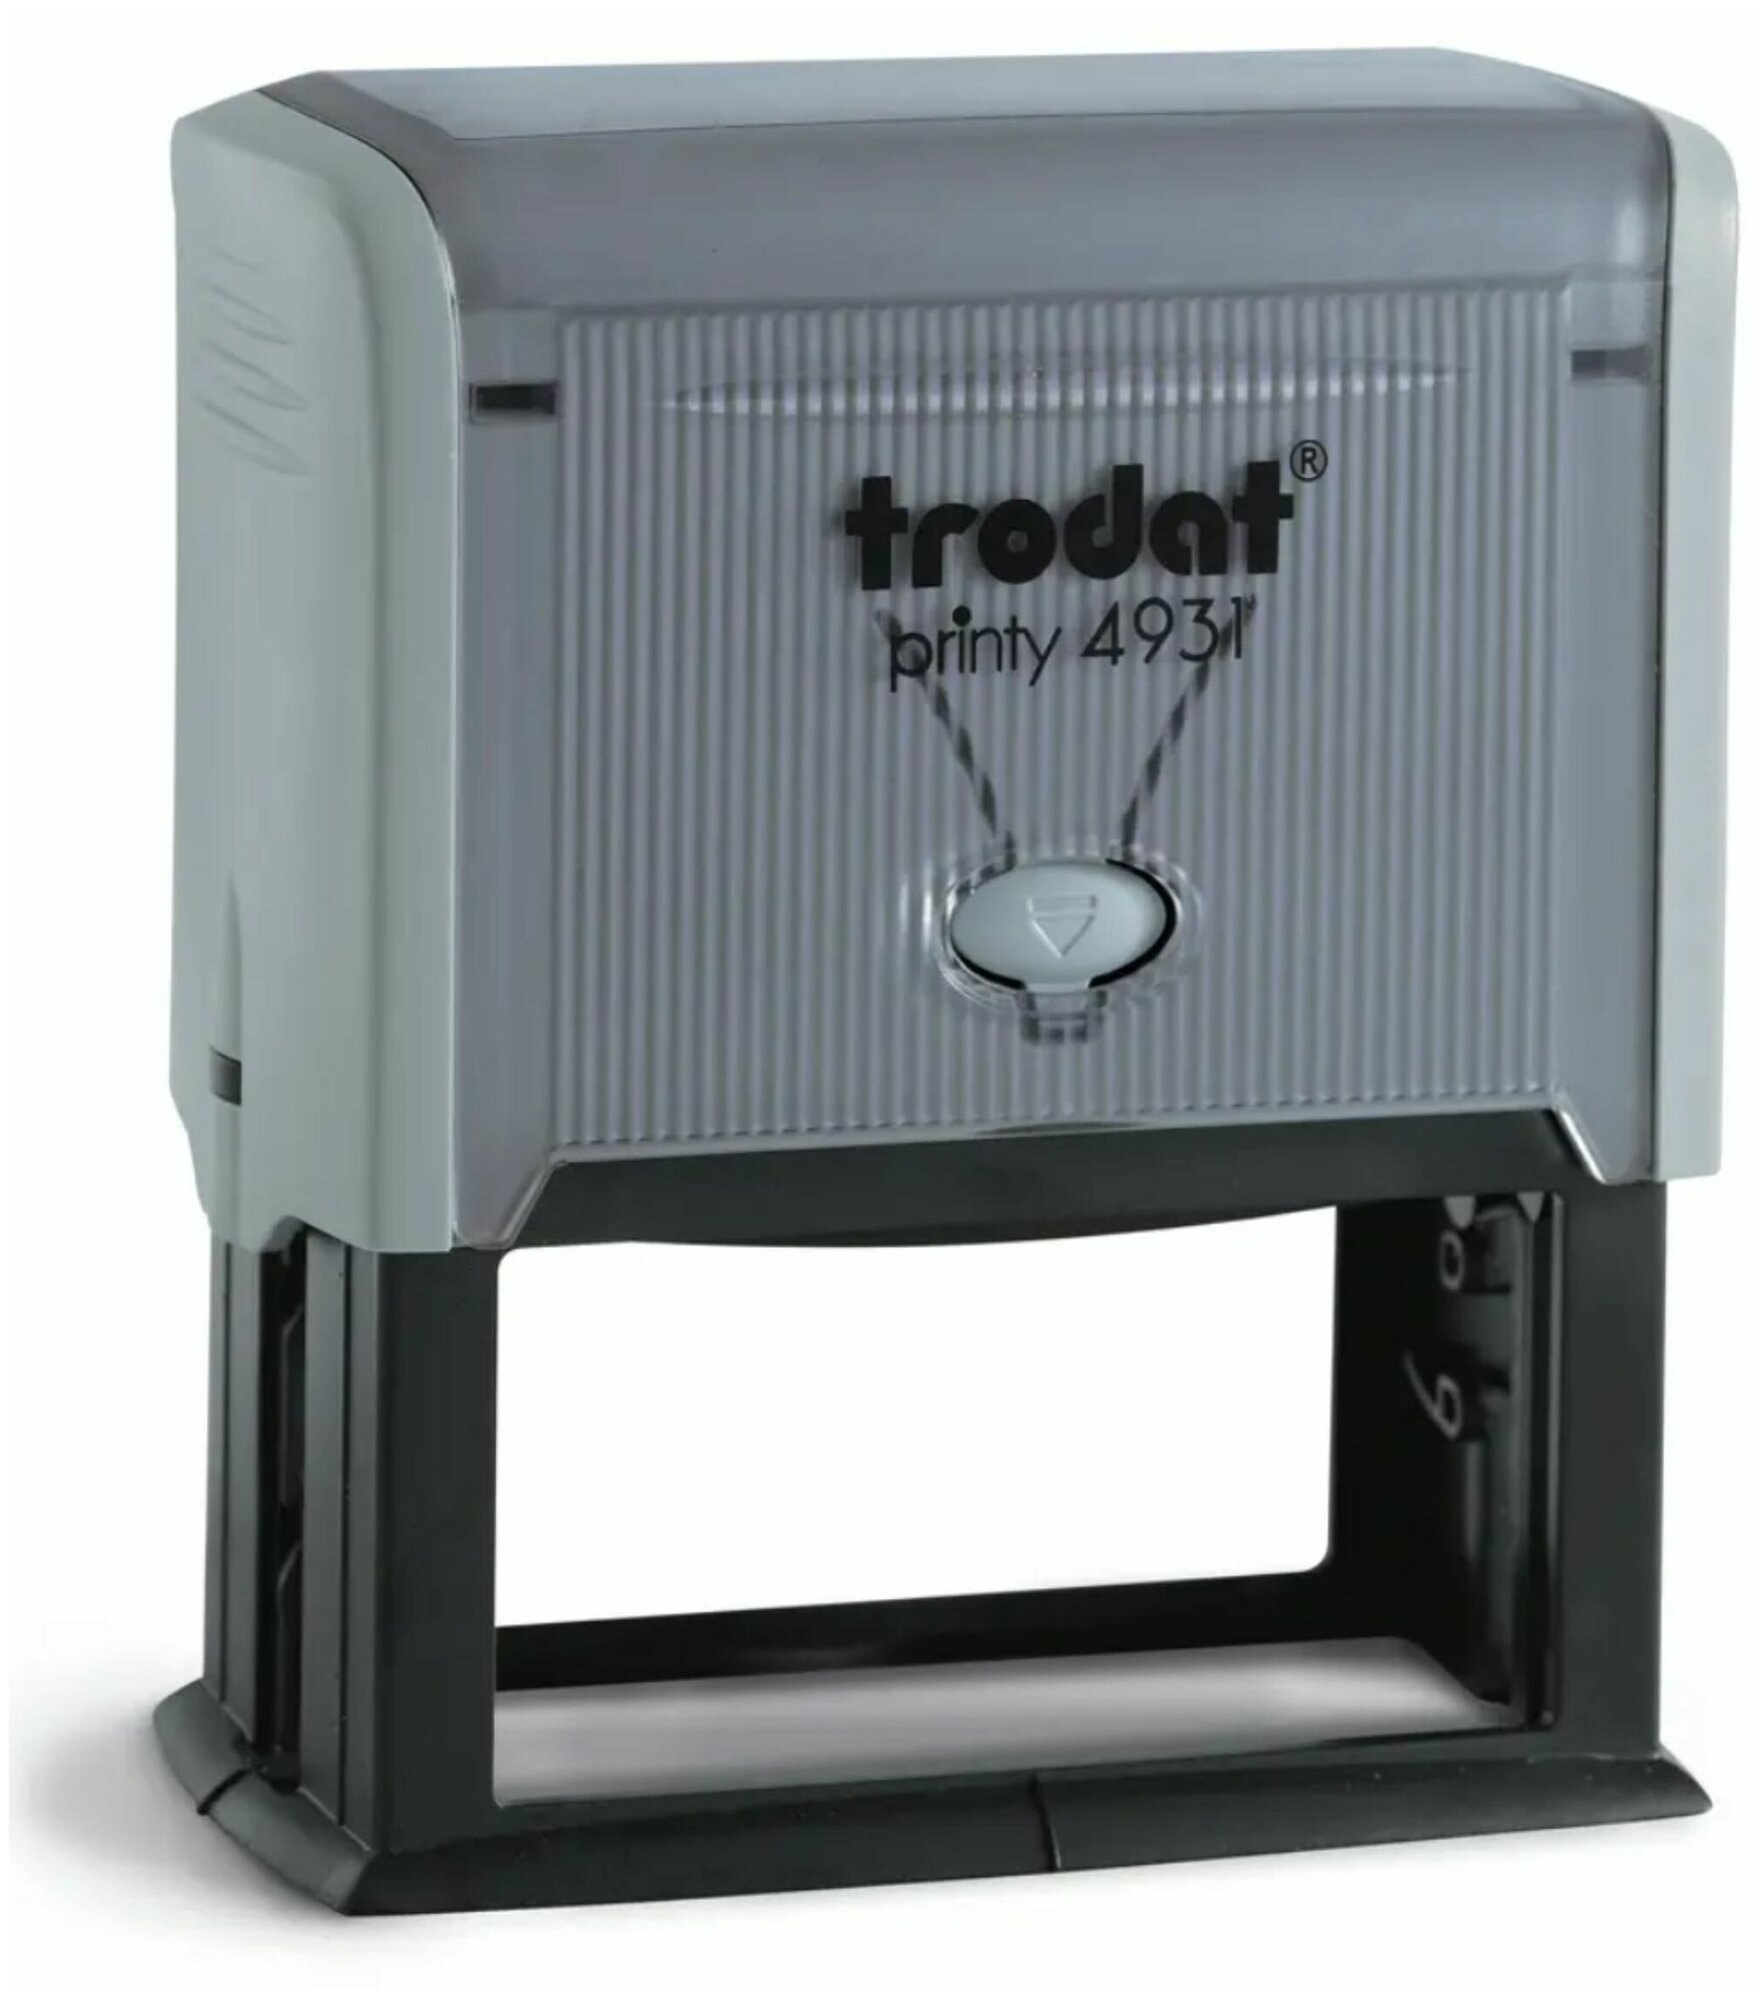 Оснастка автоматическая для штампа Trodat Printy 4931, 70х30 мм, серый корпус, синяя штемпельная подушка